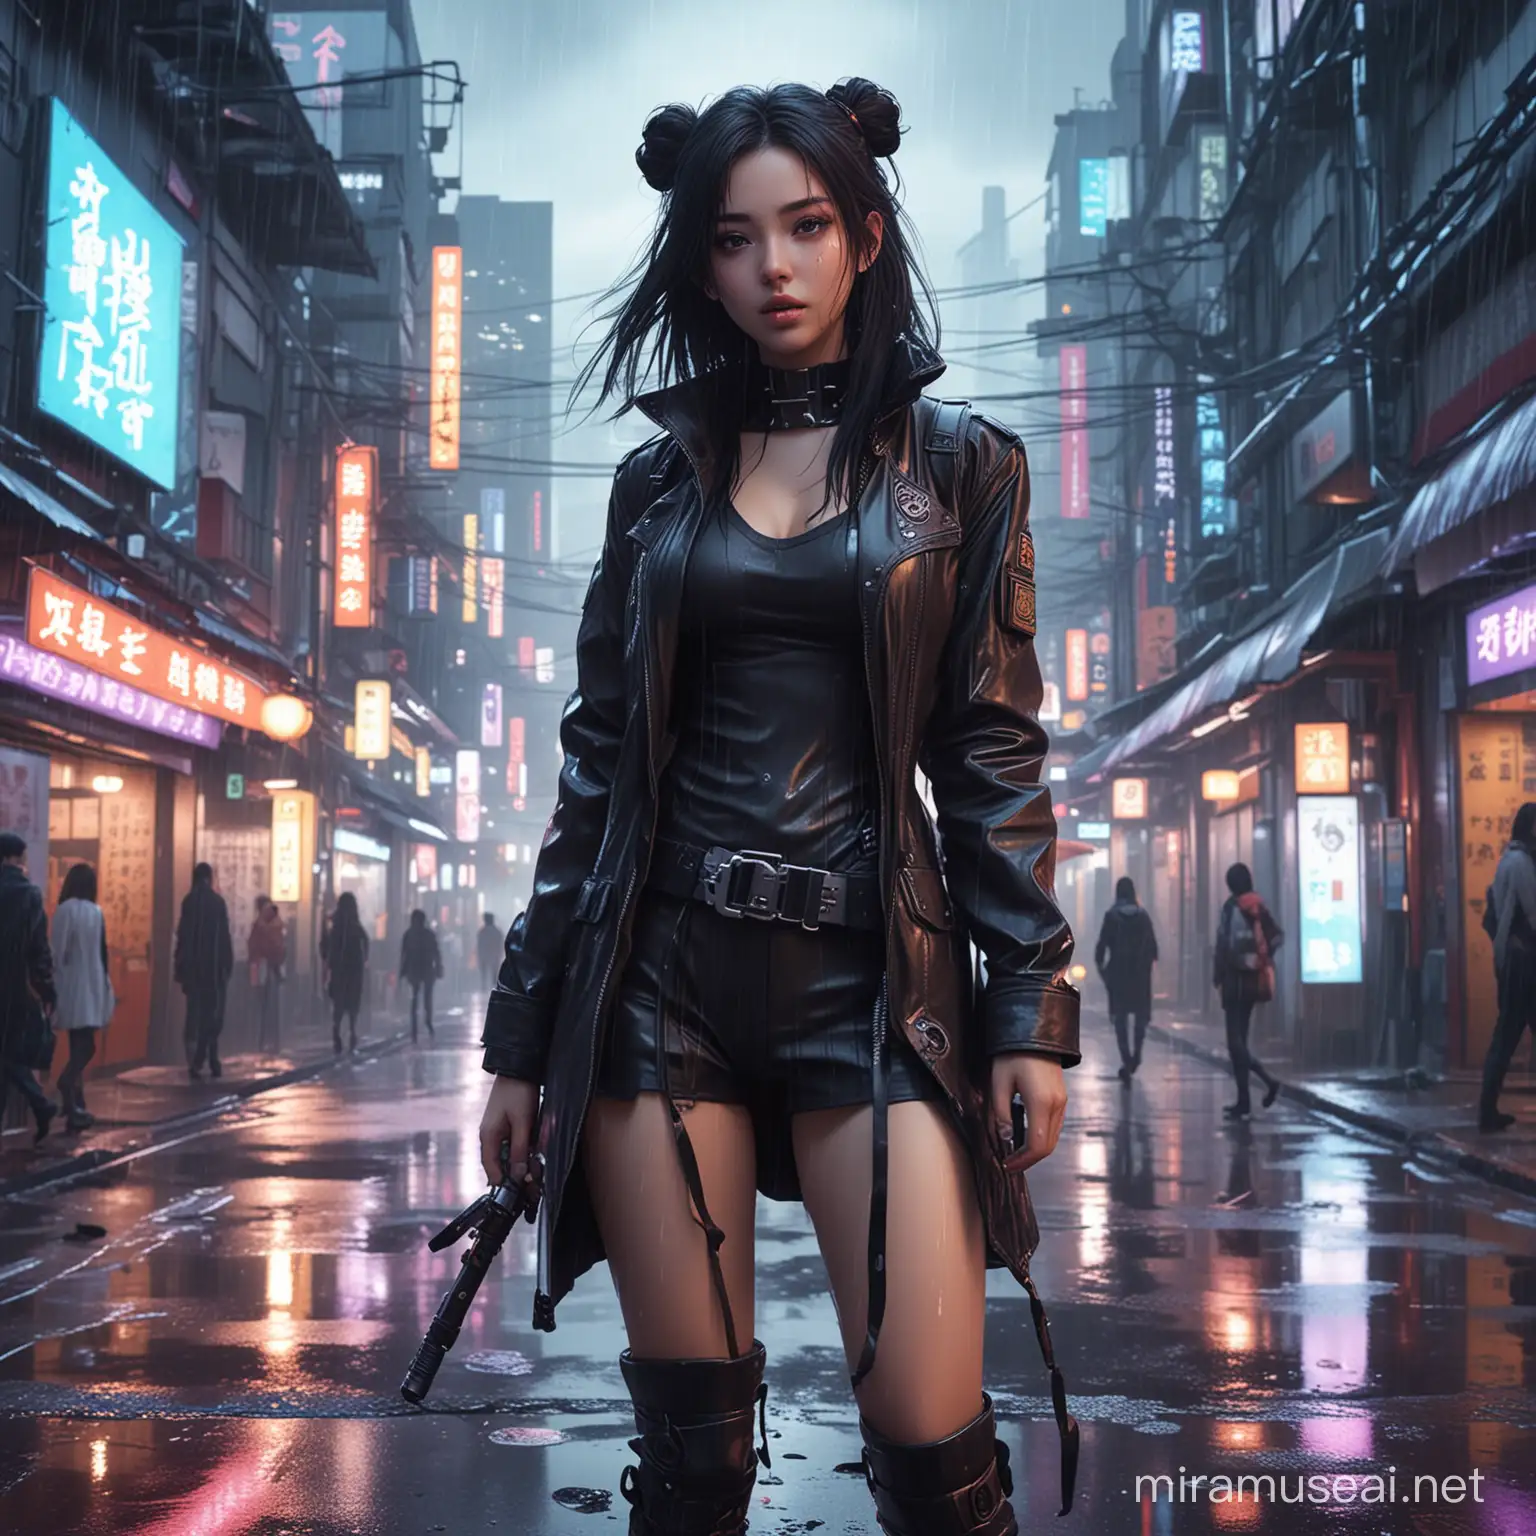 Futuristic Cyberpunk Anime Ethereal Schoolgirl Amid Neon Cityscape